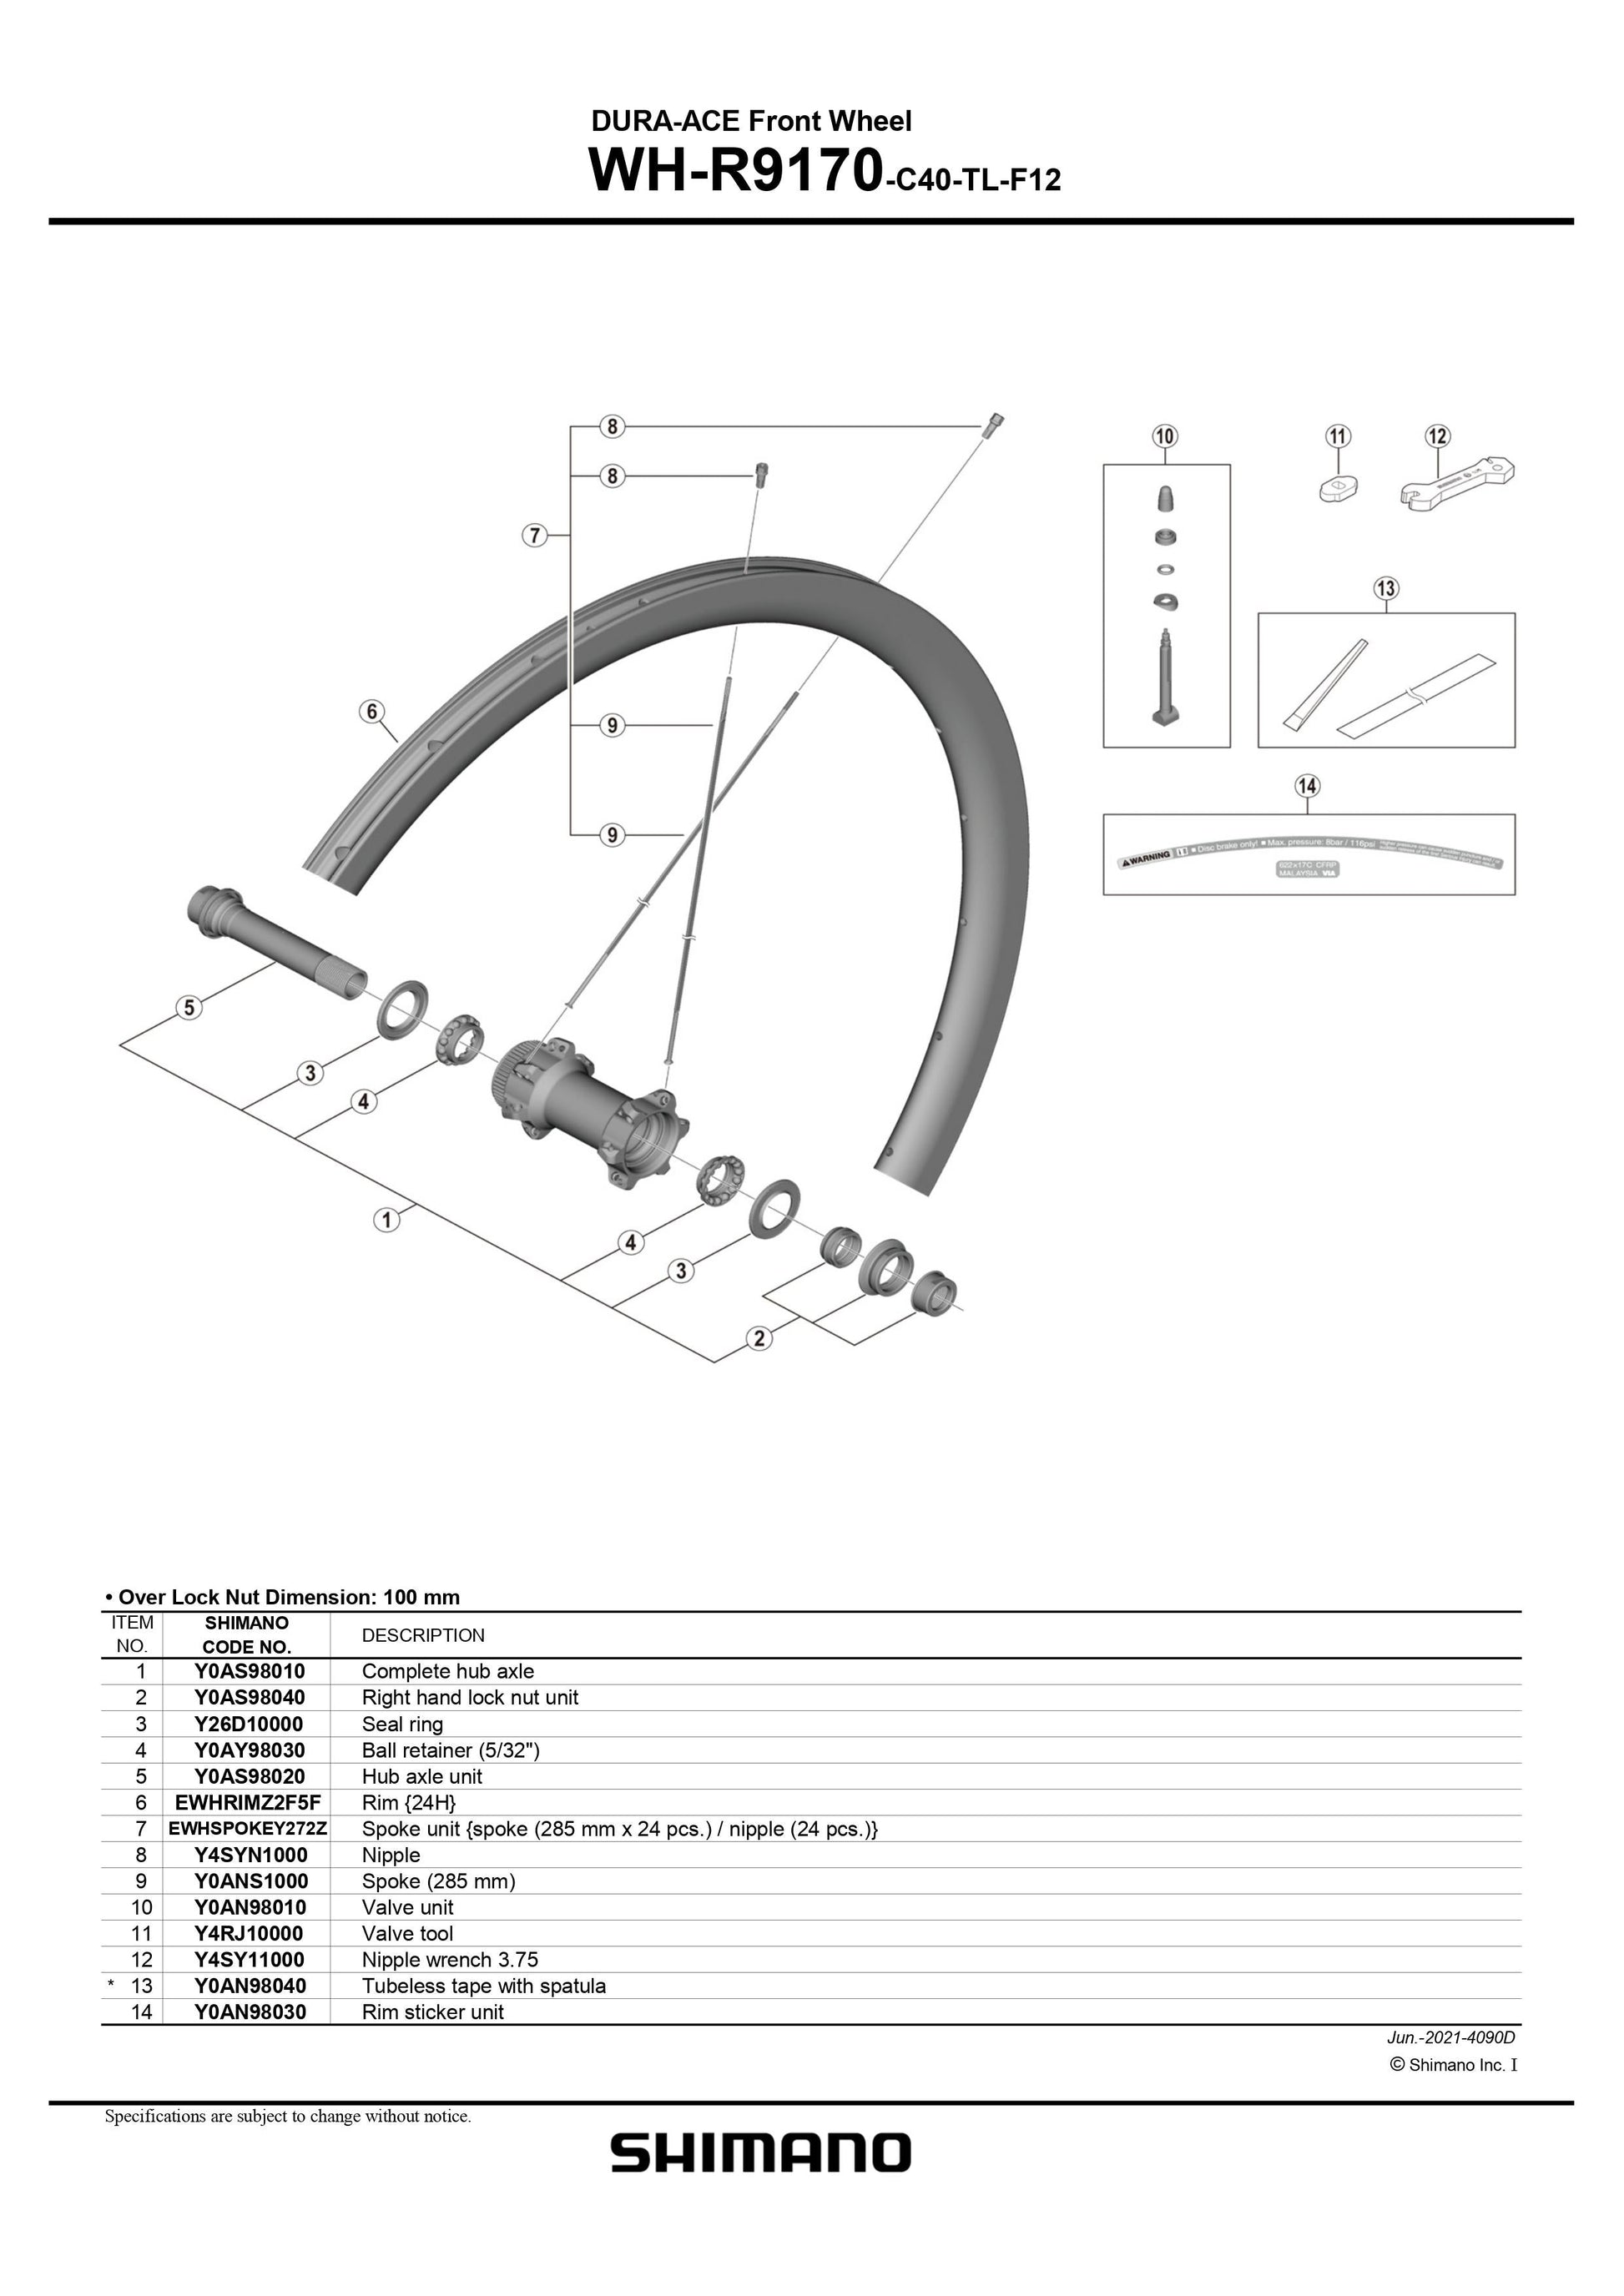 SHIMANO DURA-ACE WH-R9170-C40-TL-F12 Front Wheel Spoke Kit 285mm x 24 pcs. Nipple 24 pcs. - EWHSPOKEY272Z-Pit Crew Cycles